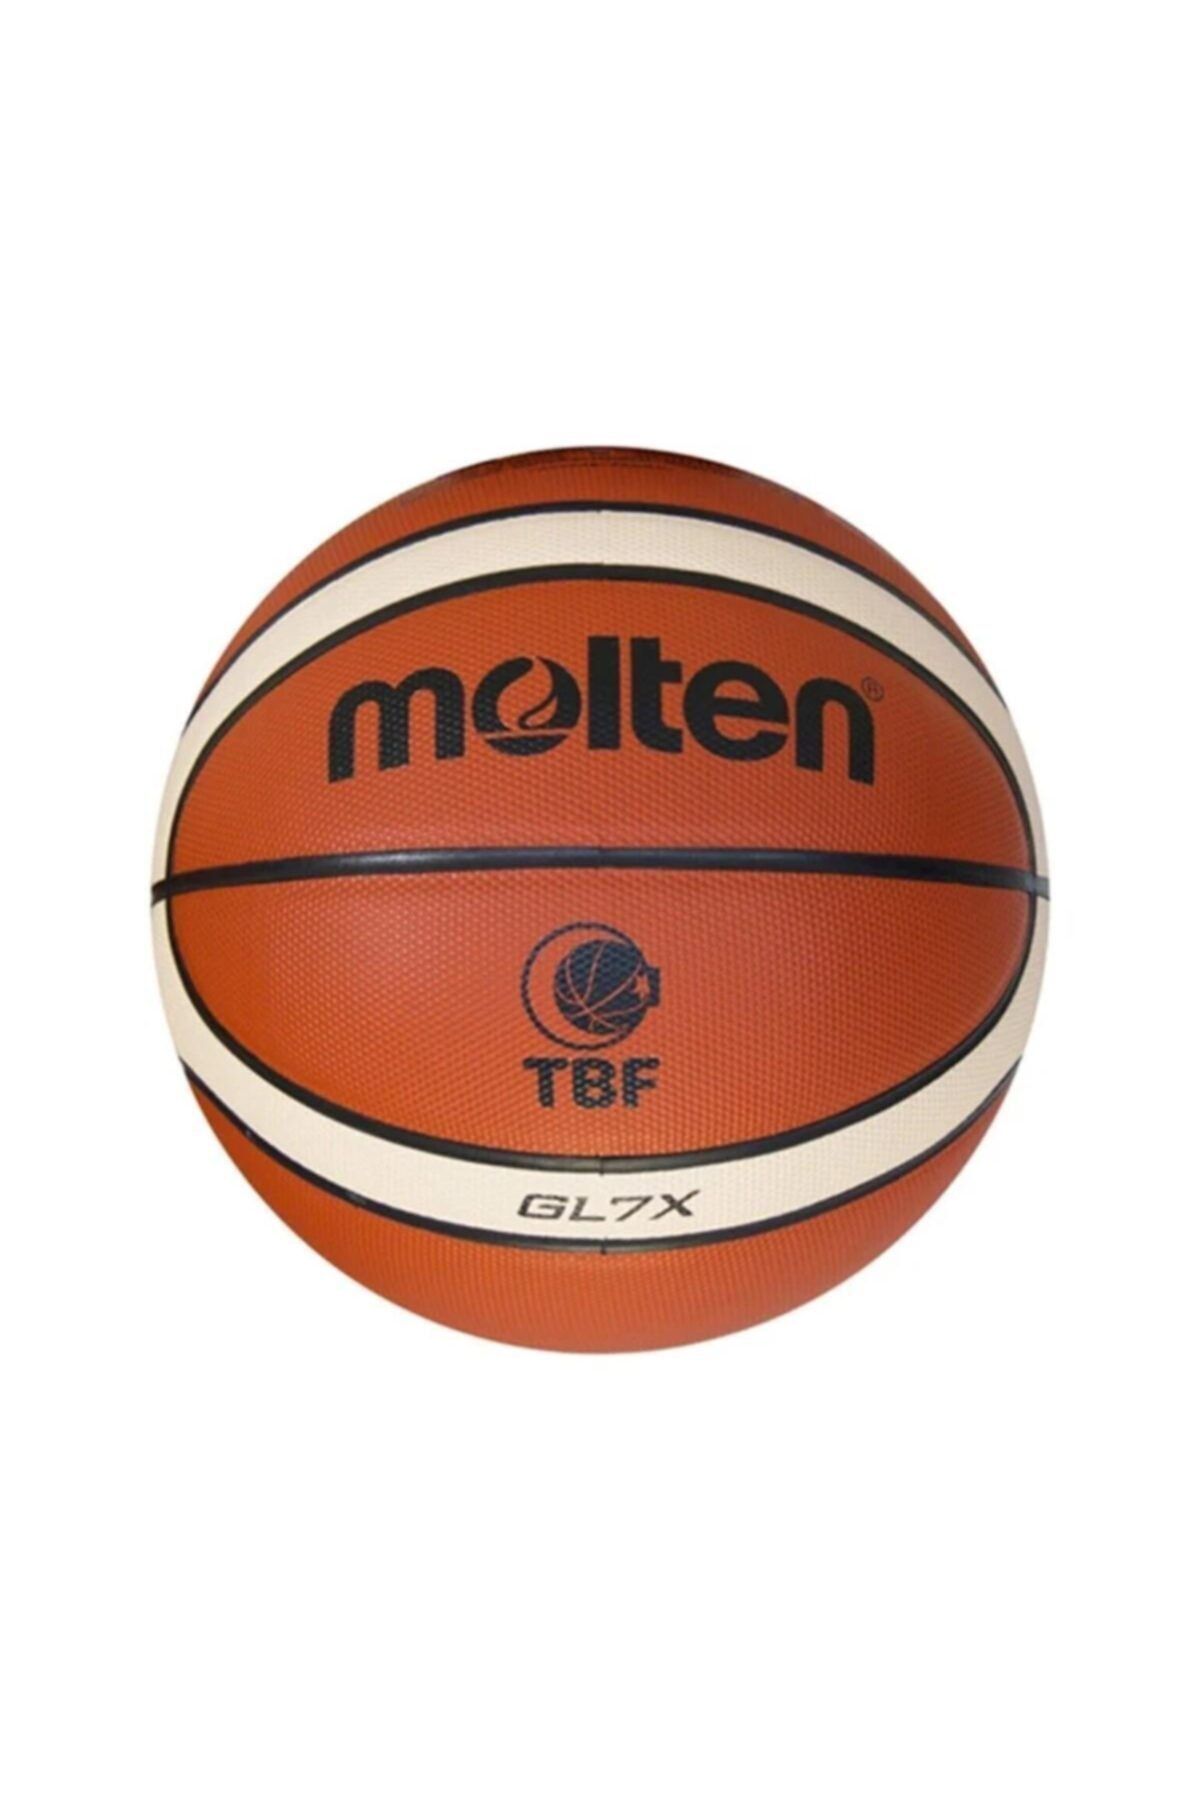 Molten Bgl7x Basketbol Topu